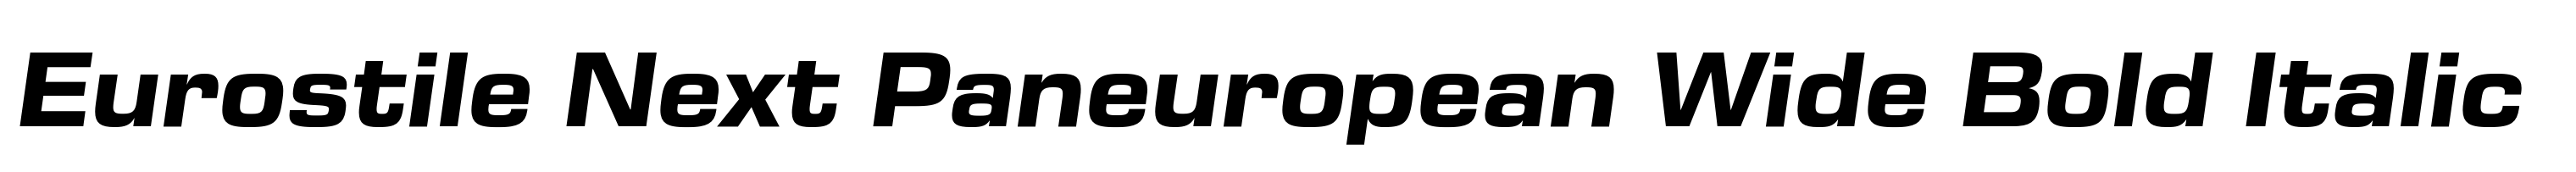 Eurostile Next Paneuropean Wide Bold Italic